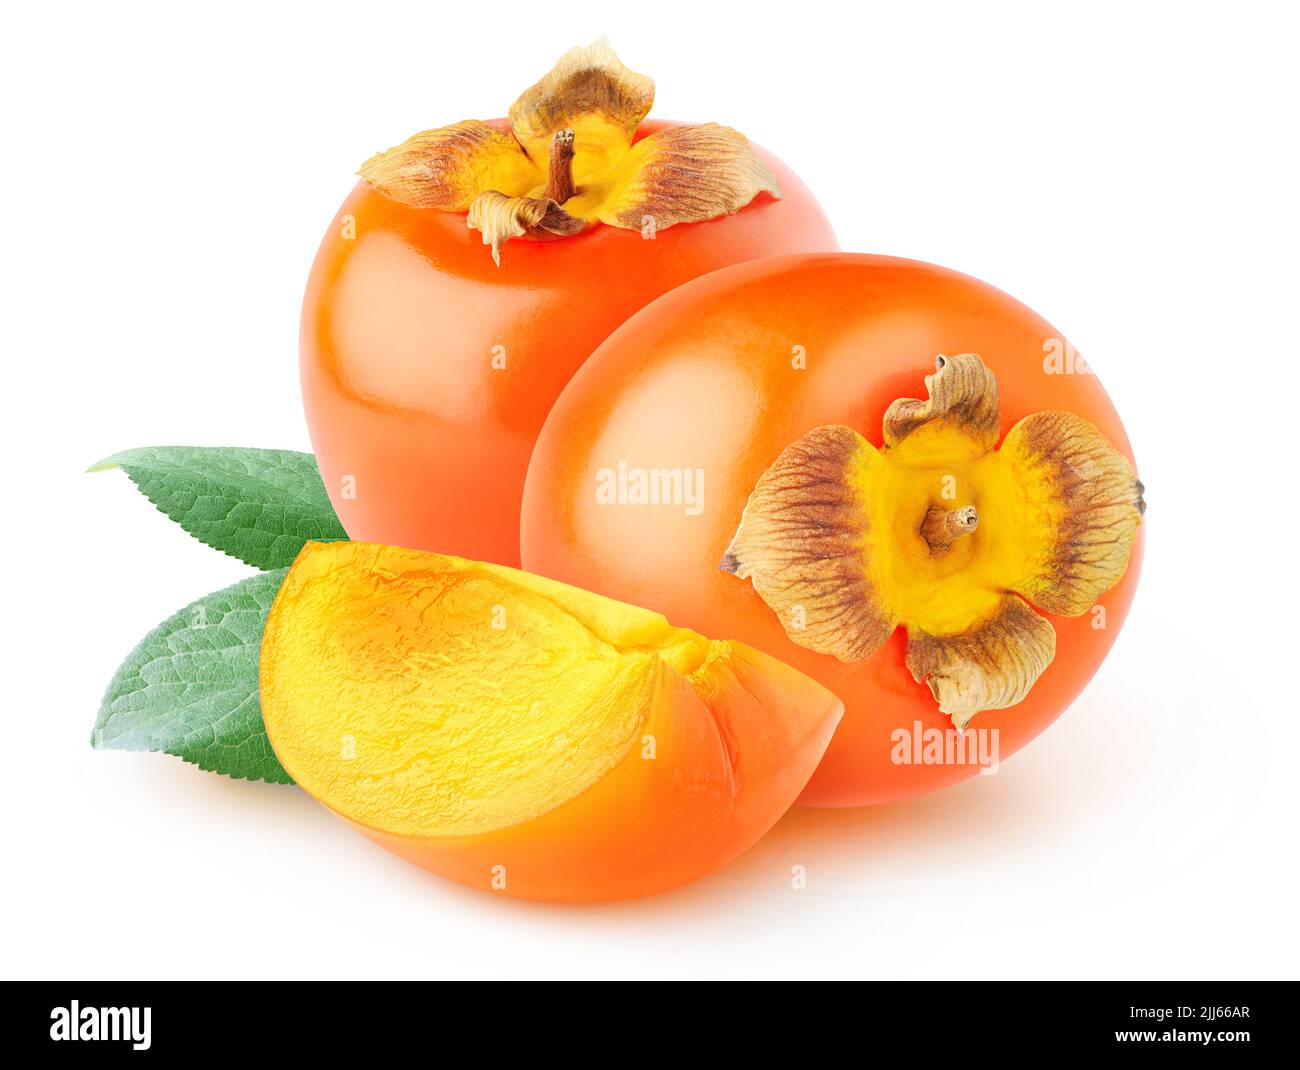 Cut kaki (persimmon) fruits isolated on white background Stock Photo